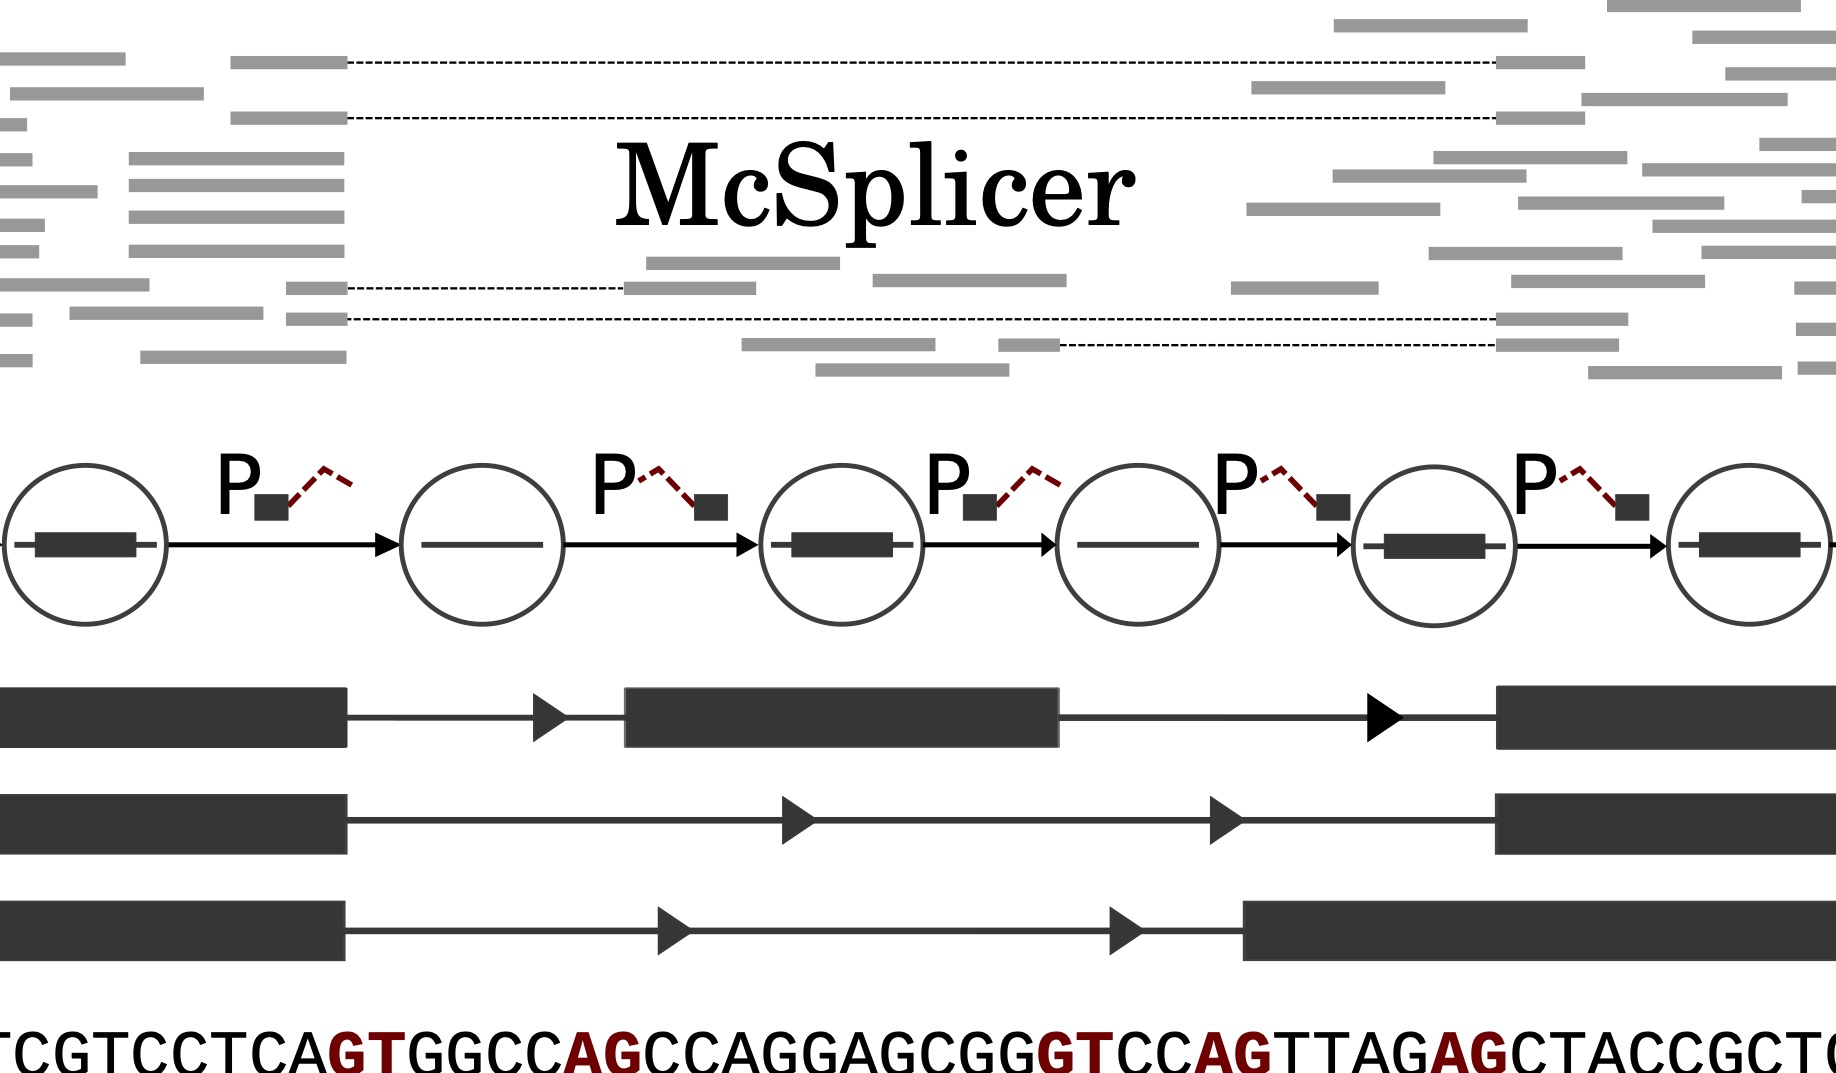 McSplicer: a probabilistic model for estimating splice site usage from RNA-seq data